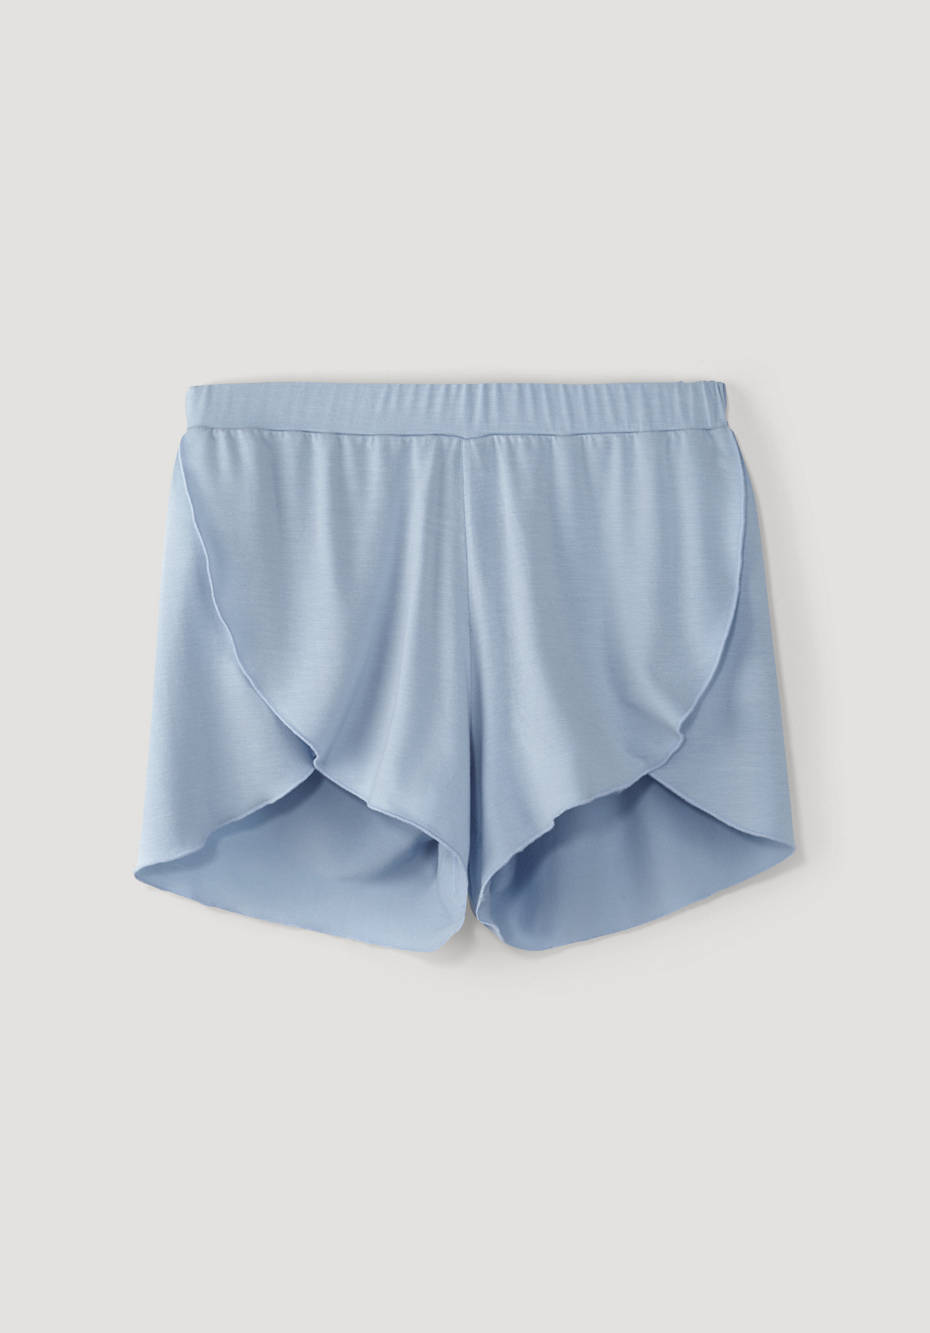 Shorts made from TENCEL ™ Modal